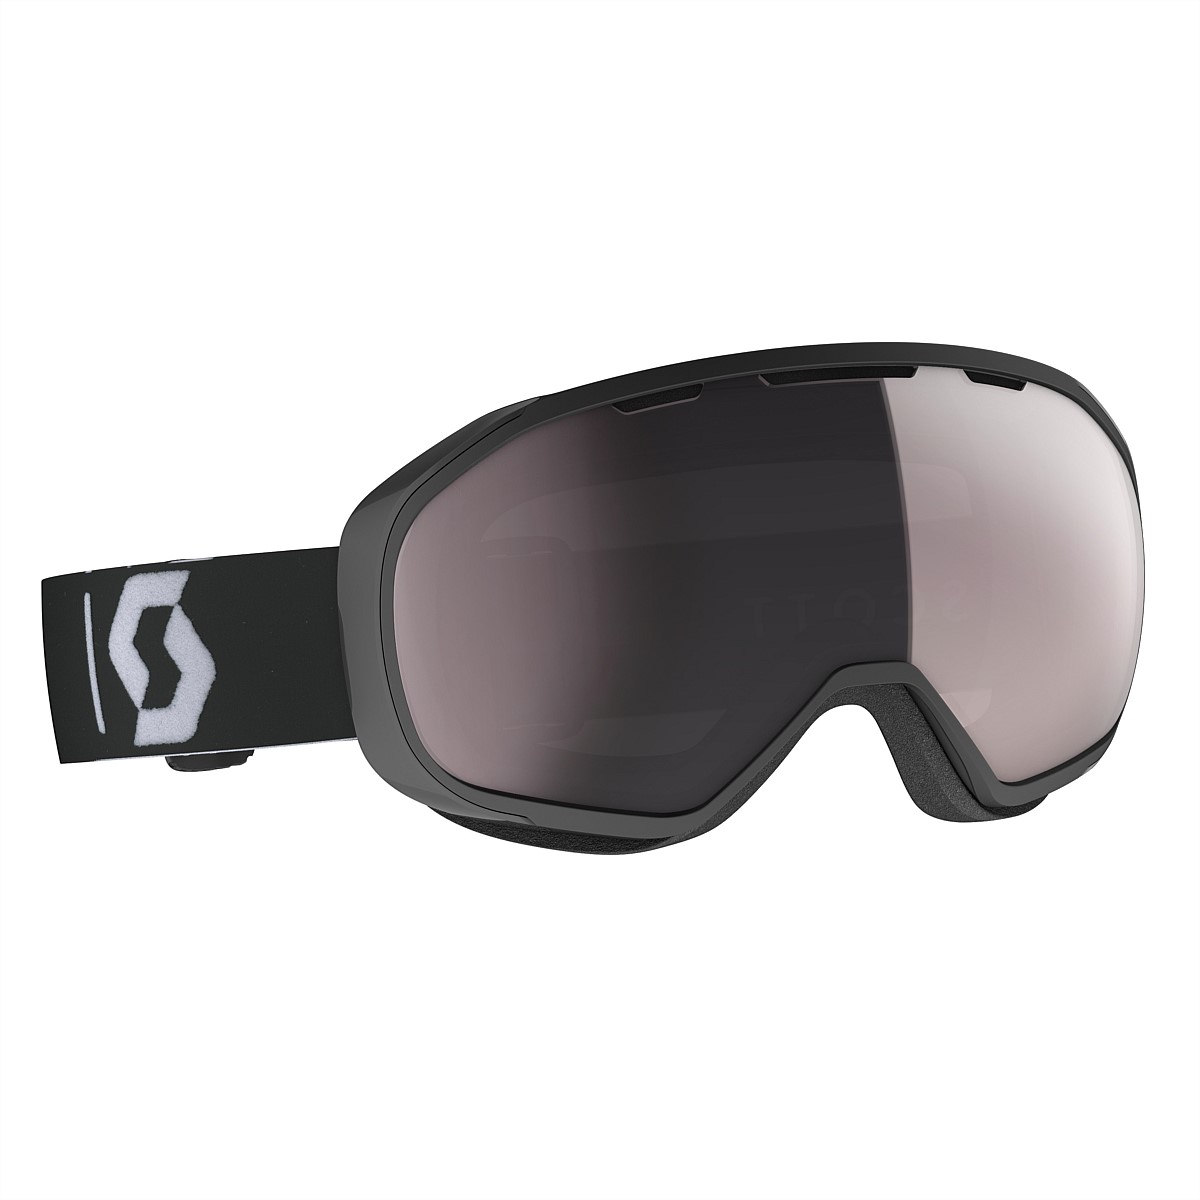 Outdoors & Sports - Ski Goggle Fix